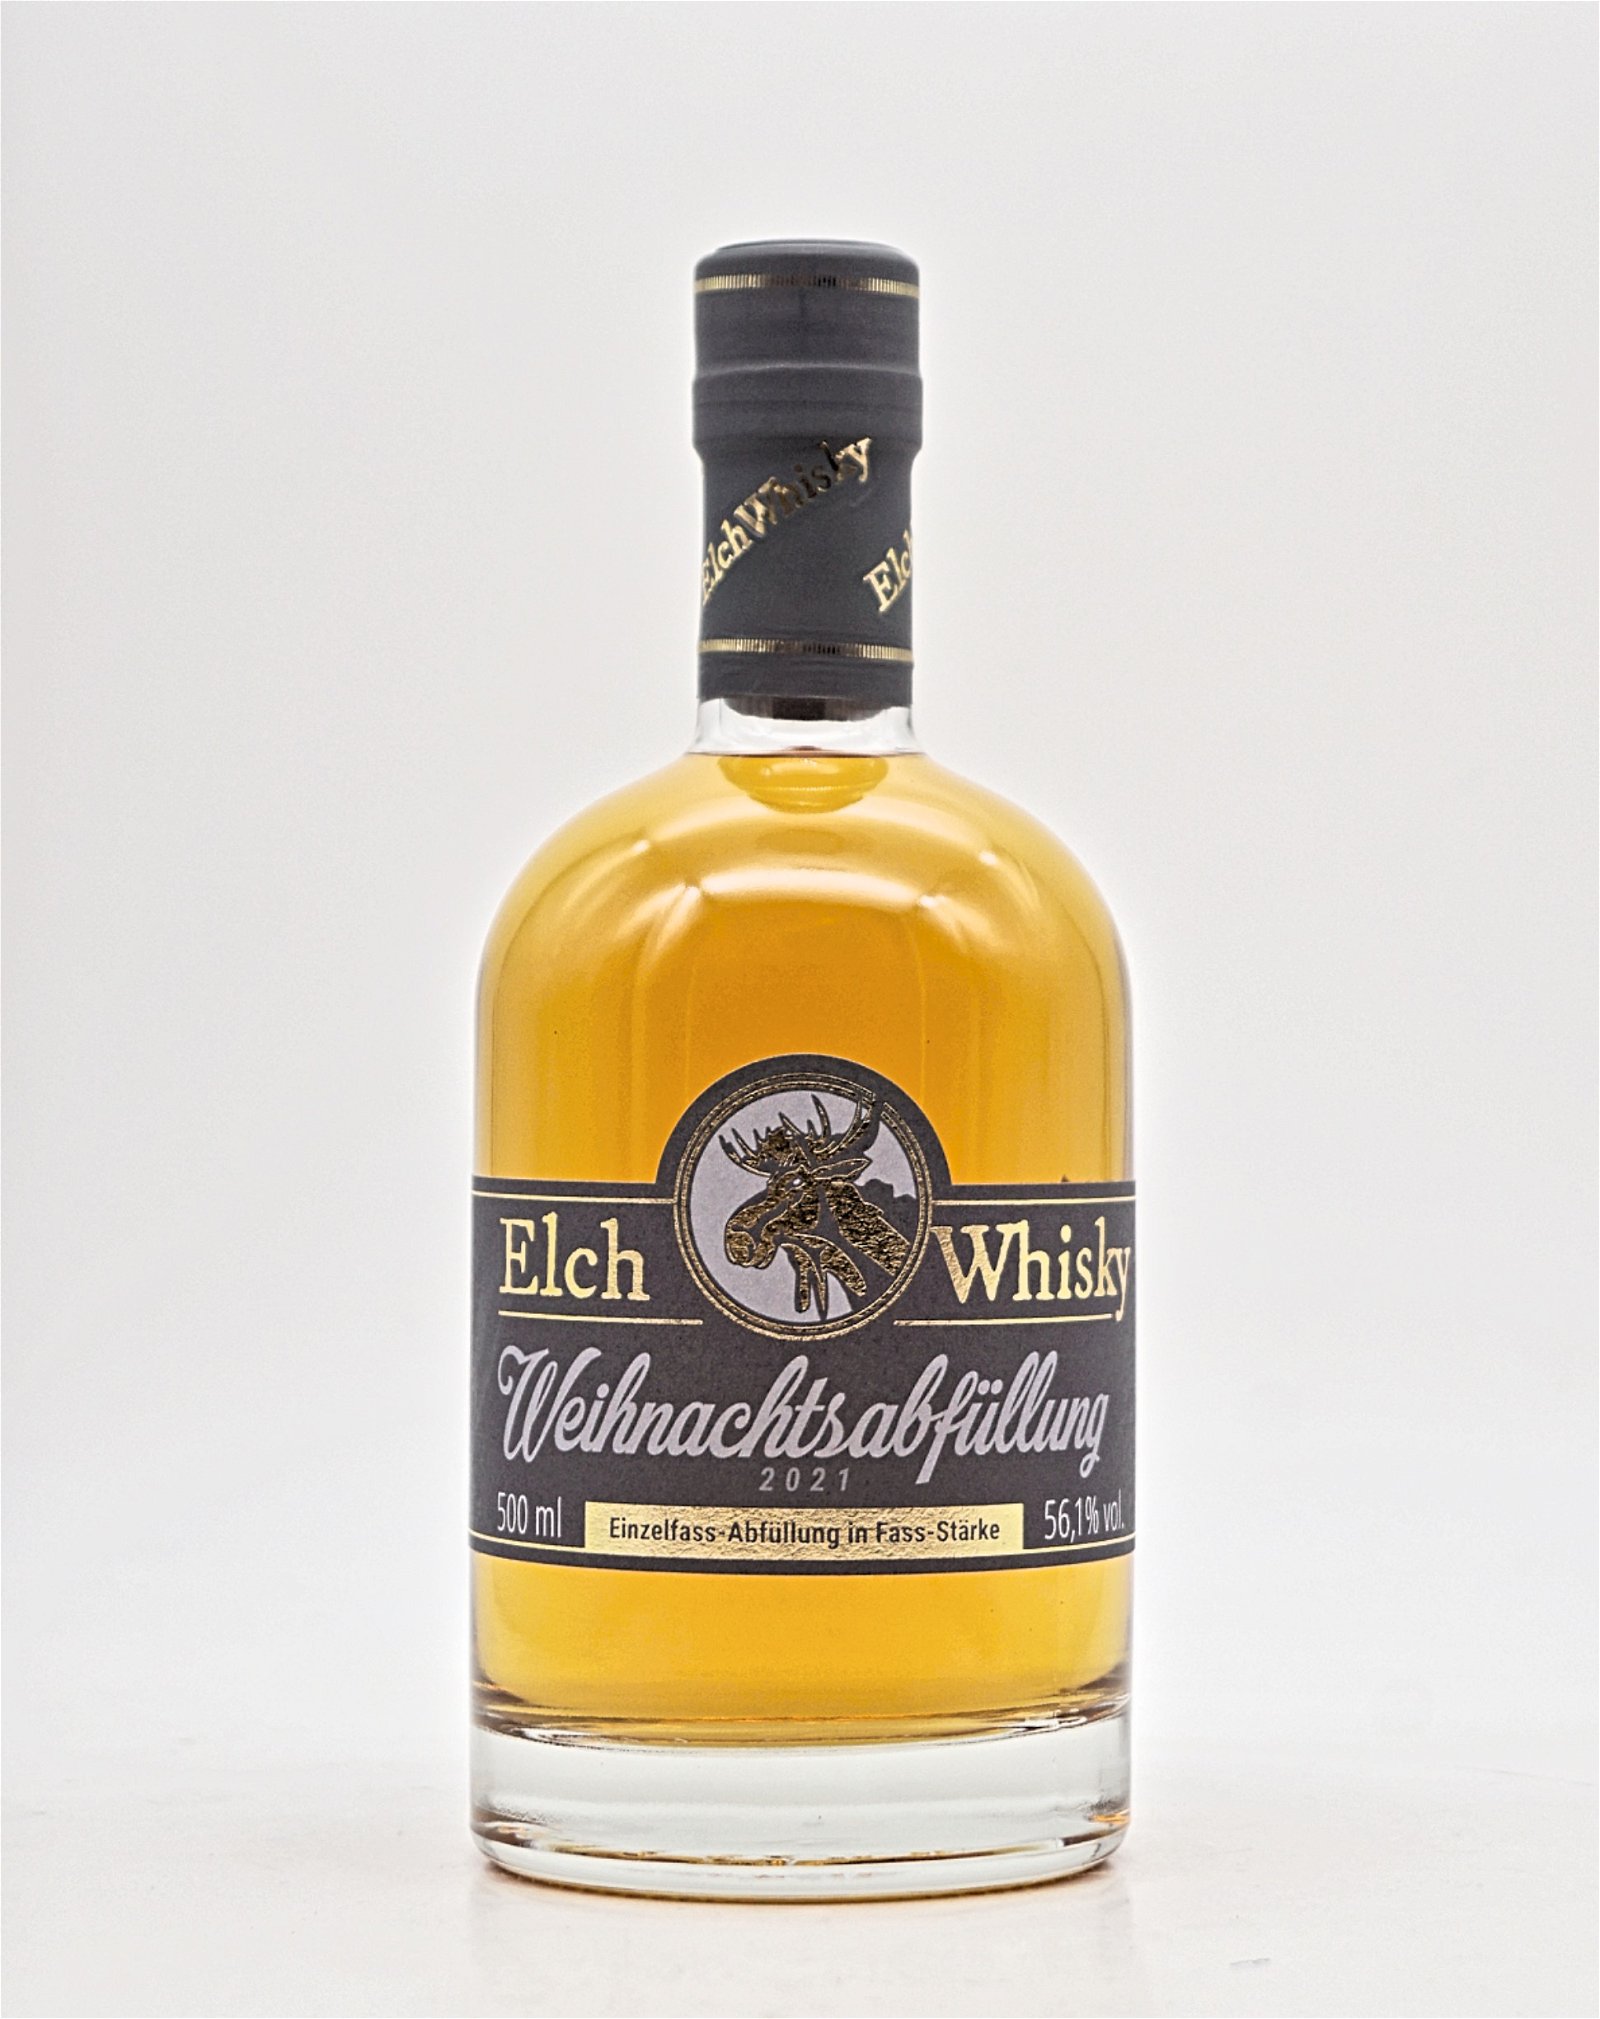 Elch Whisky Weihnachtsabfüllung 2021 Single Cask Single Malt Whisky